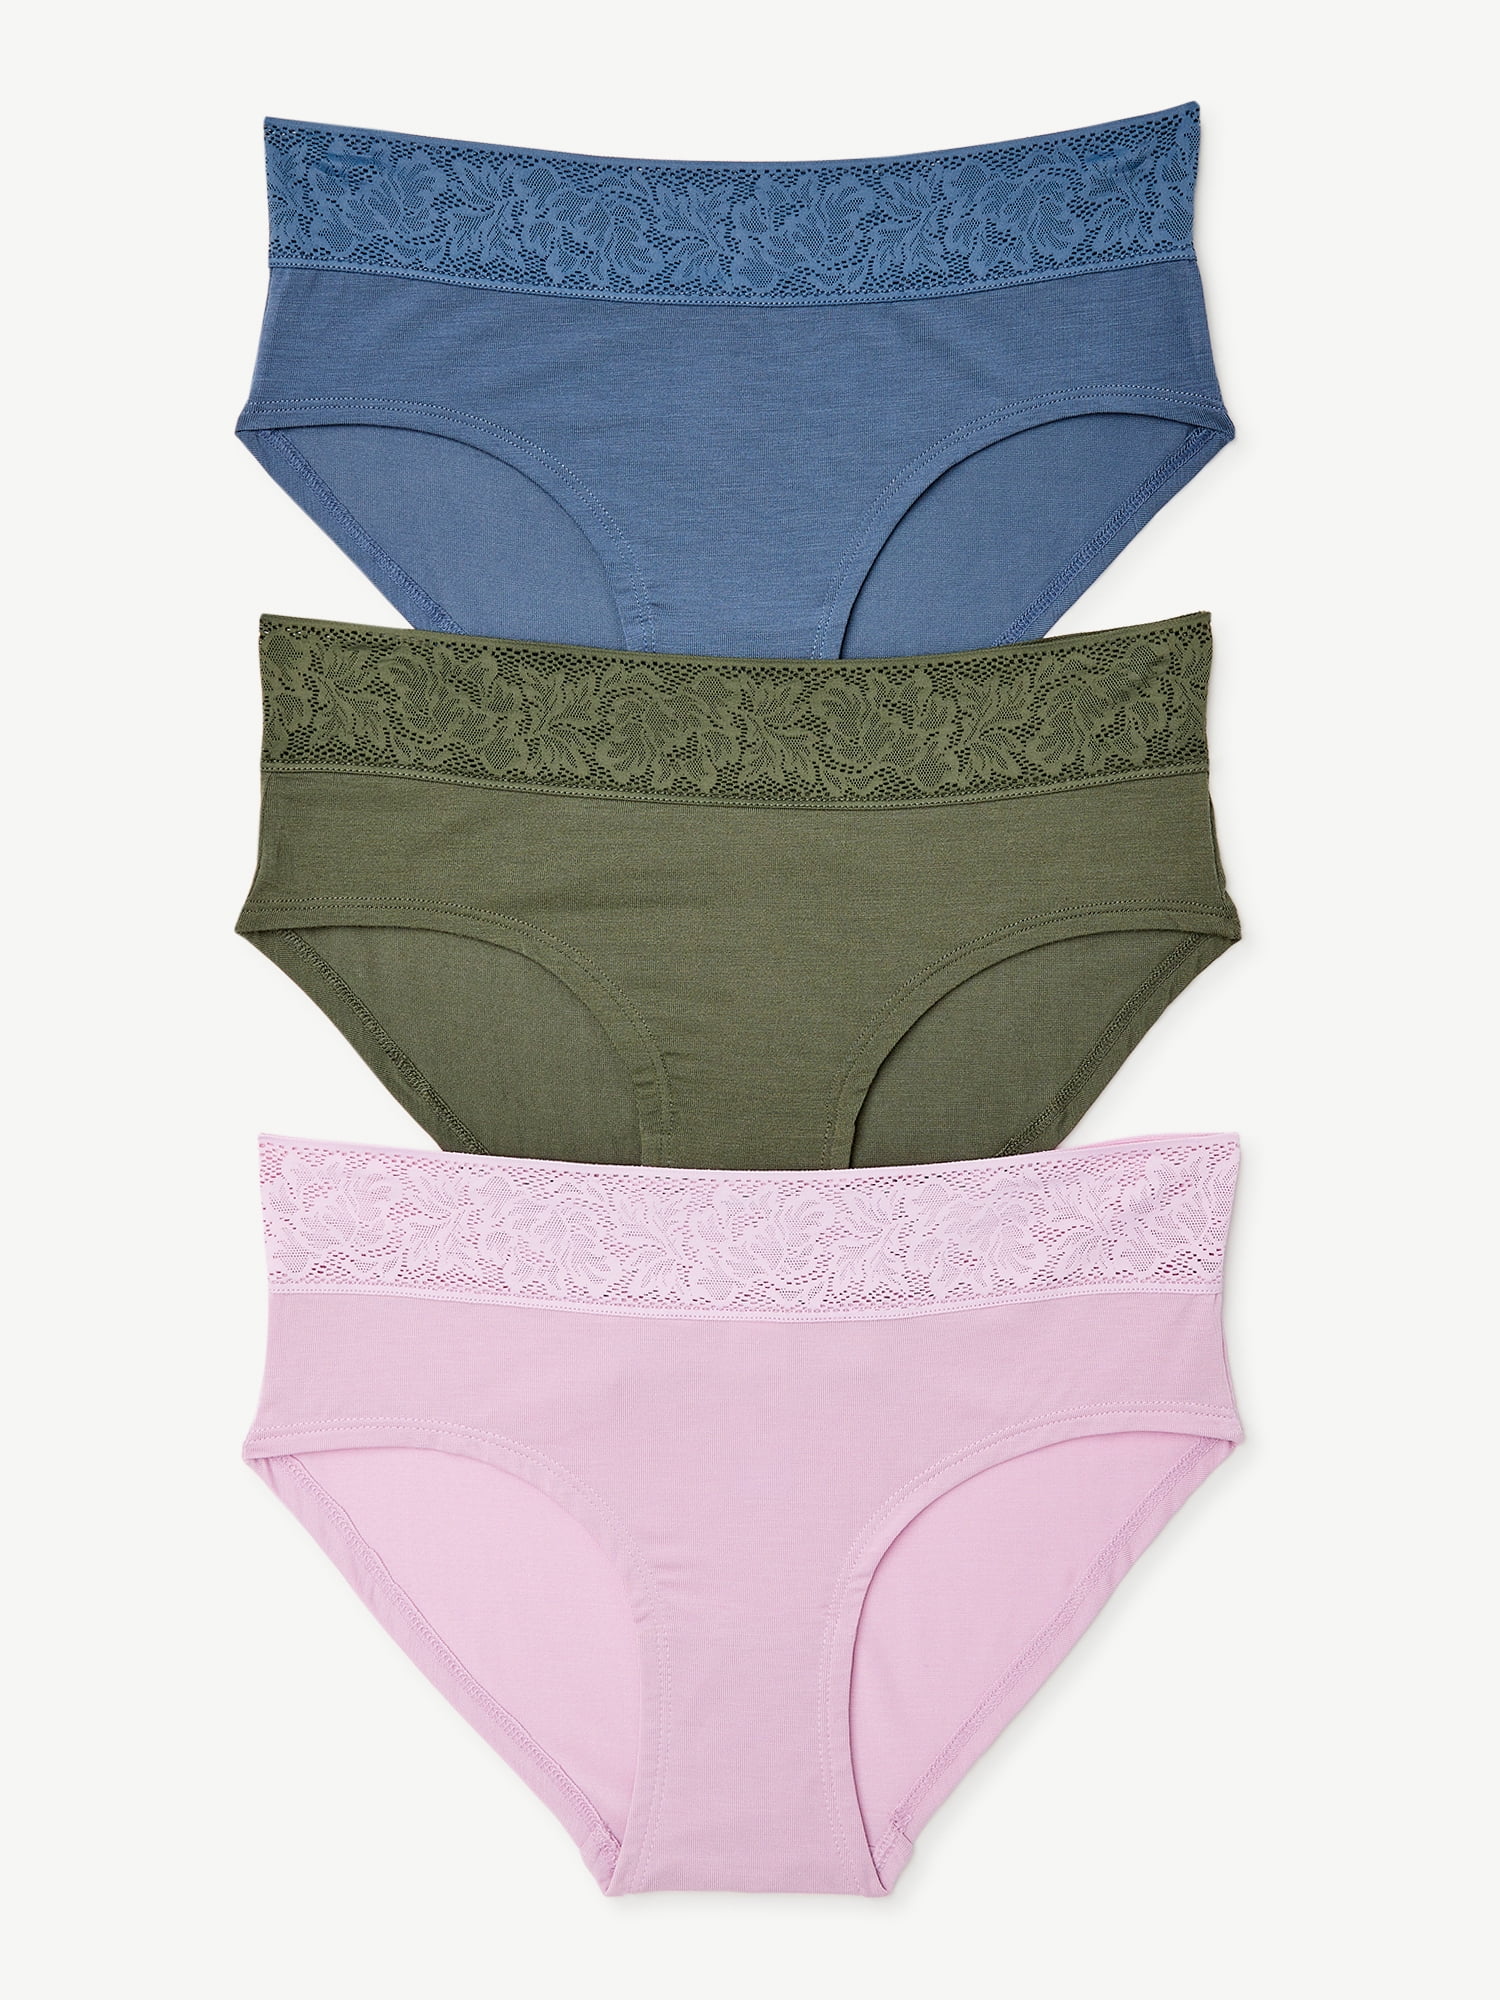 Joyspun Women's Stretch Lace Hipster Panties, 6-Pack, Sizes S to 2XL